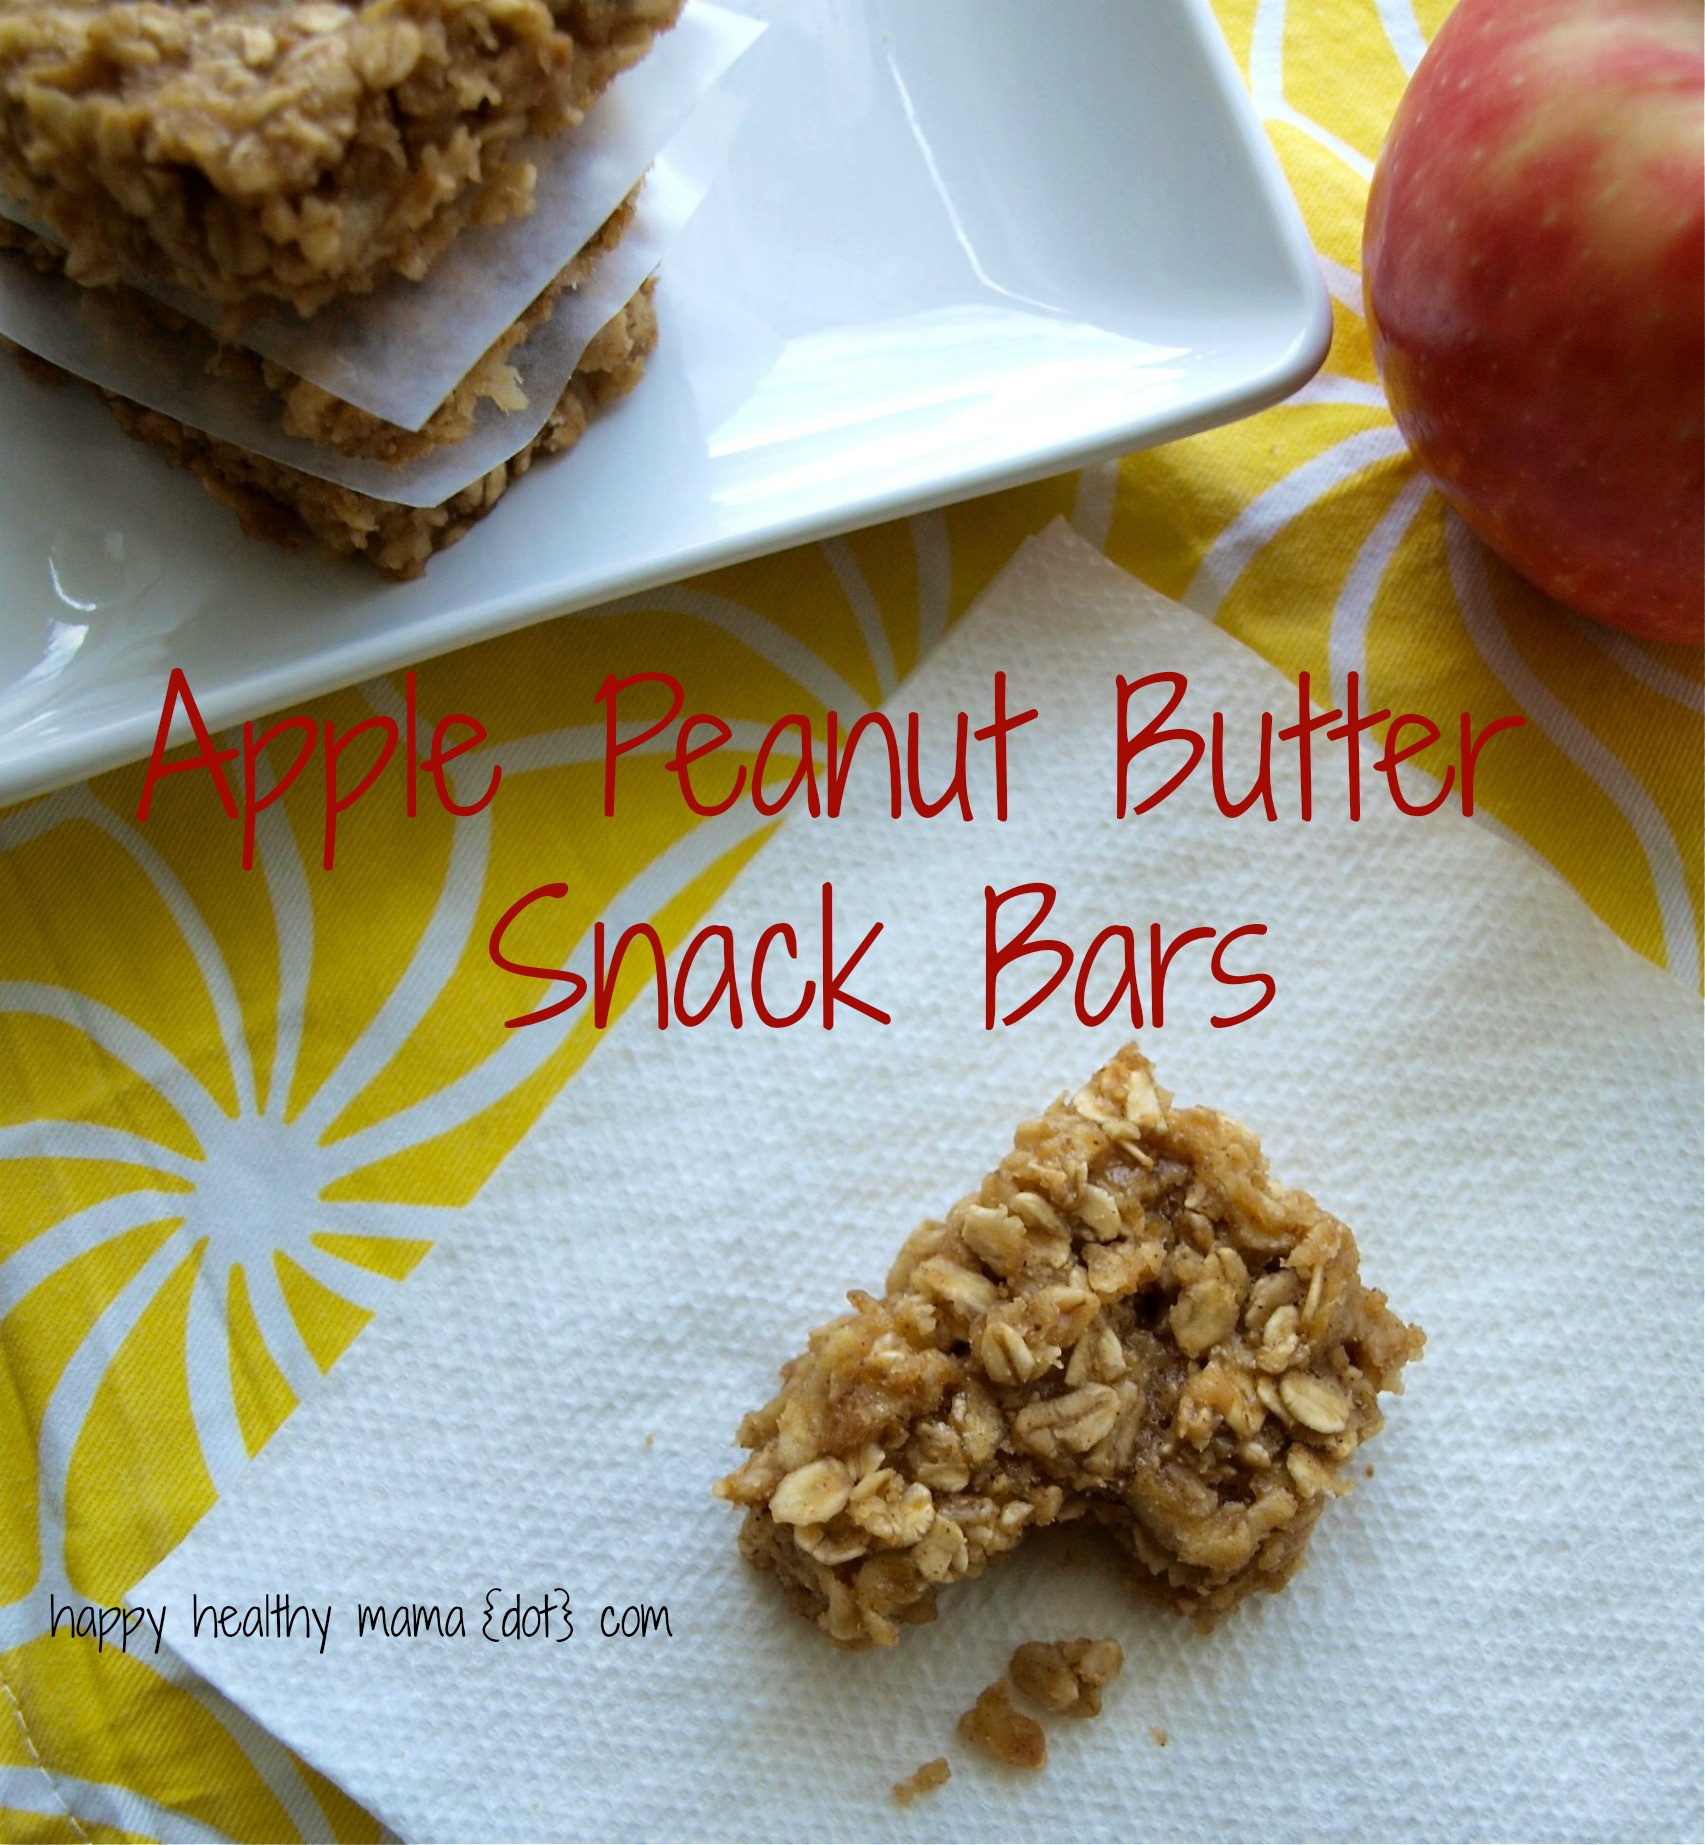 Healthy Peanut Butter Snacks
 Apple peanut butter snack bars Happy Healthy Mama